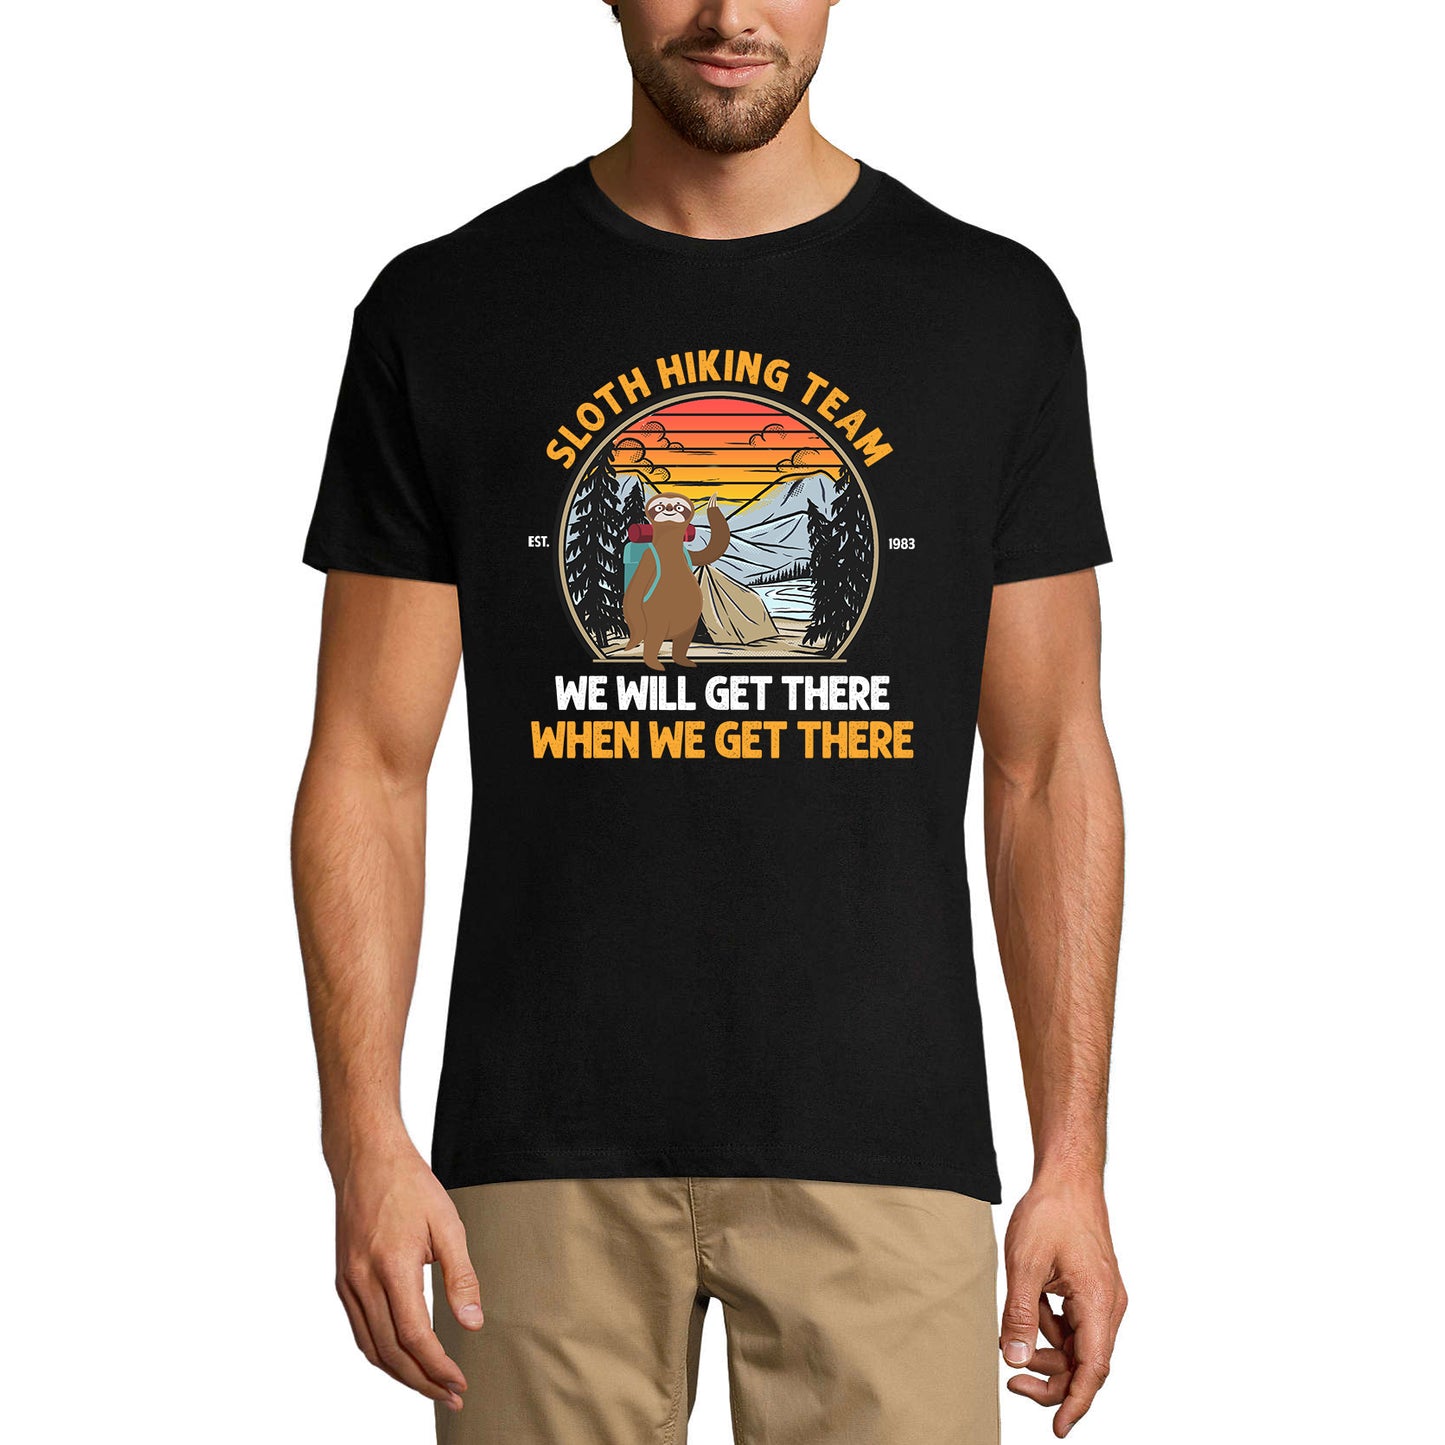 ULTRABASIC Men's T-Shirt Sloth Hiking Team - Funny Mountain Hiker Tee Shirt